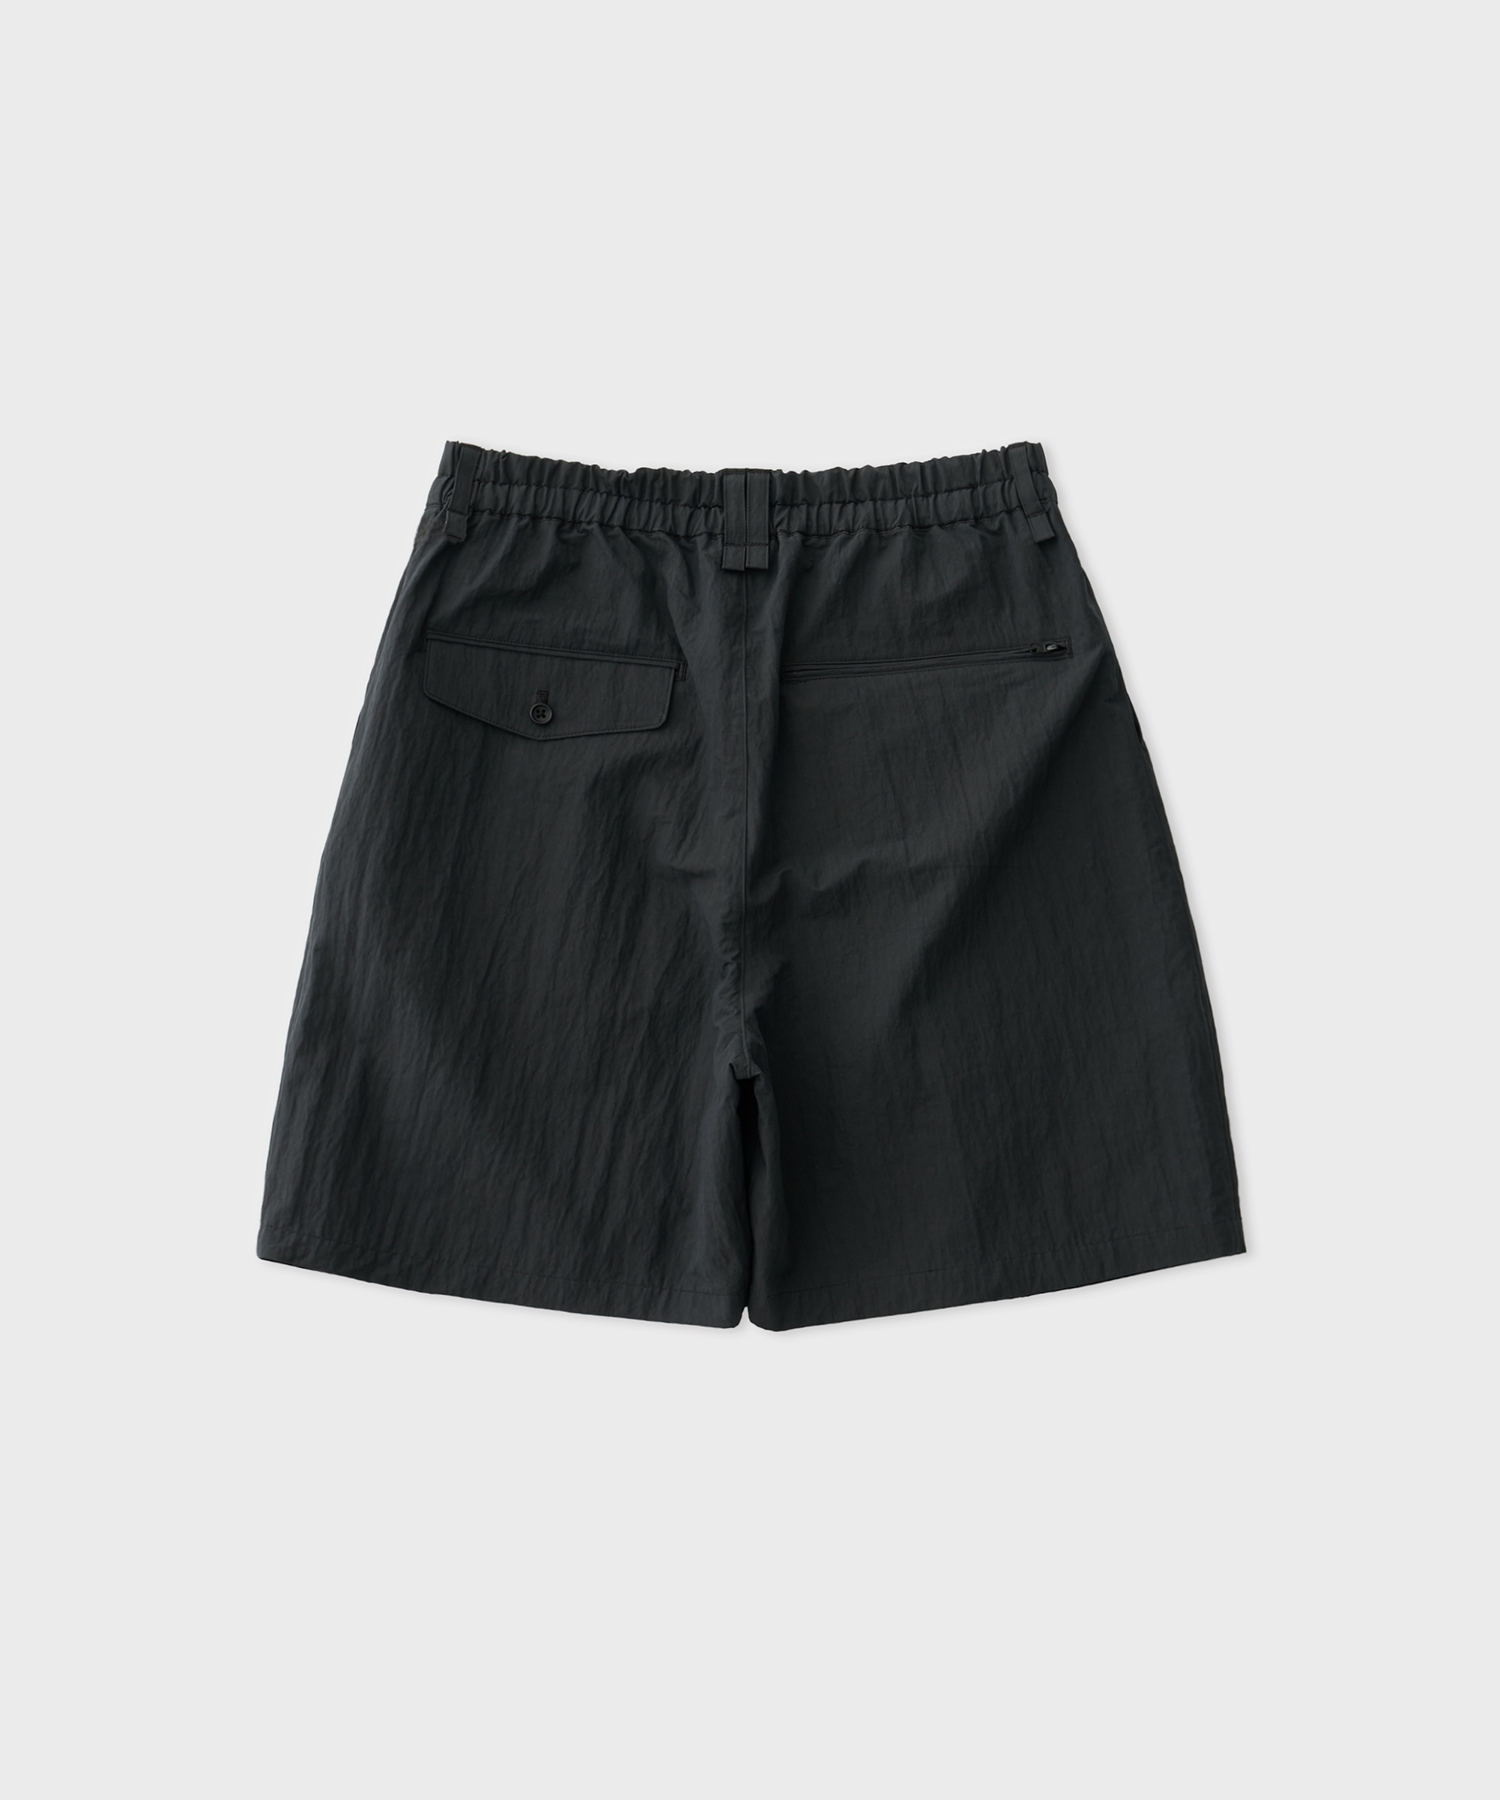 Salt Shrinkage Packable Shorts (Black)